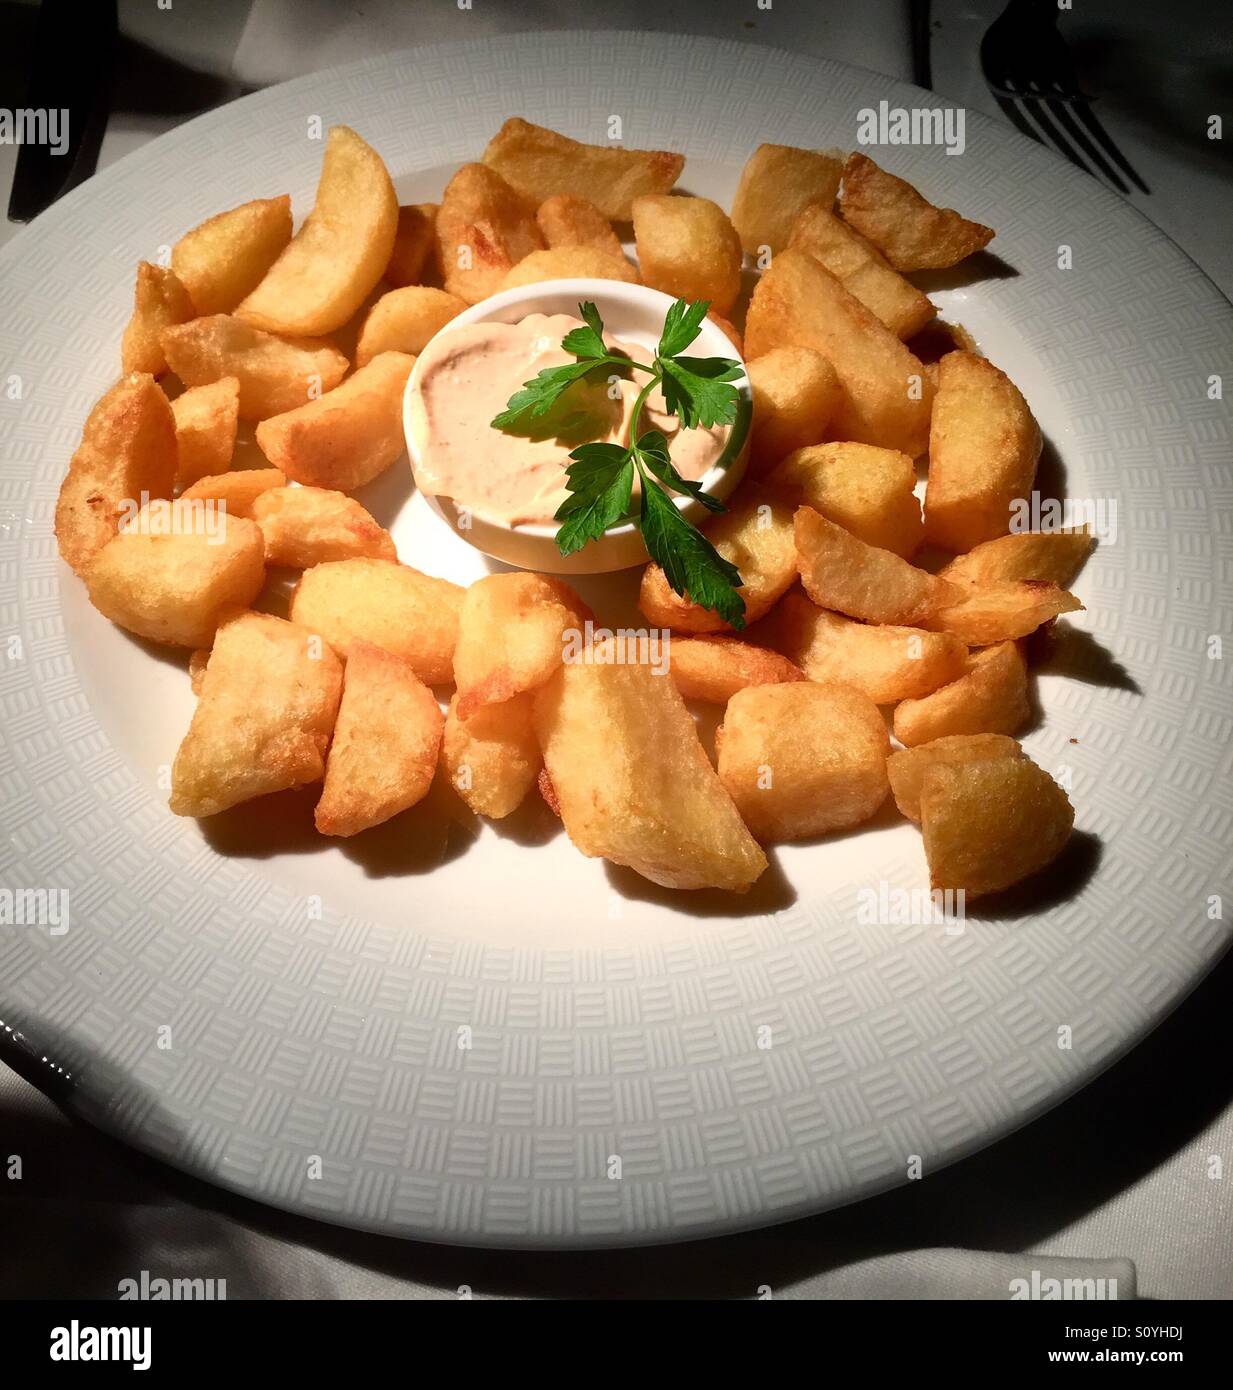 Patatas bravas on a white plate Stock Photo